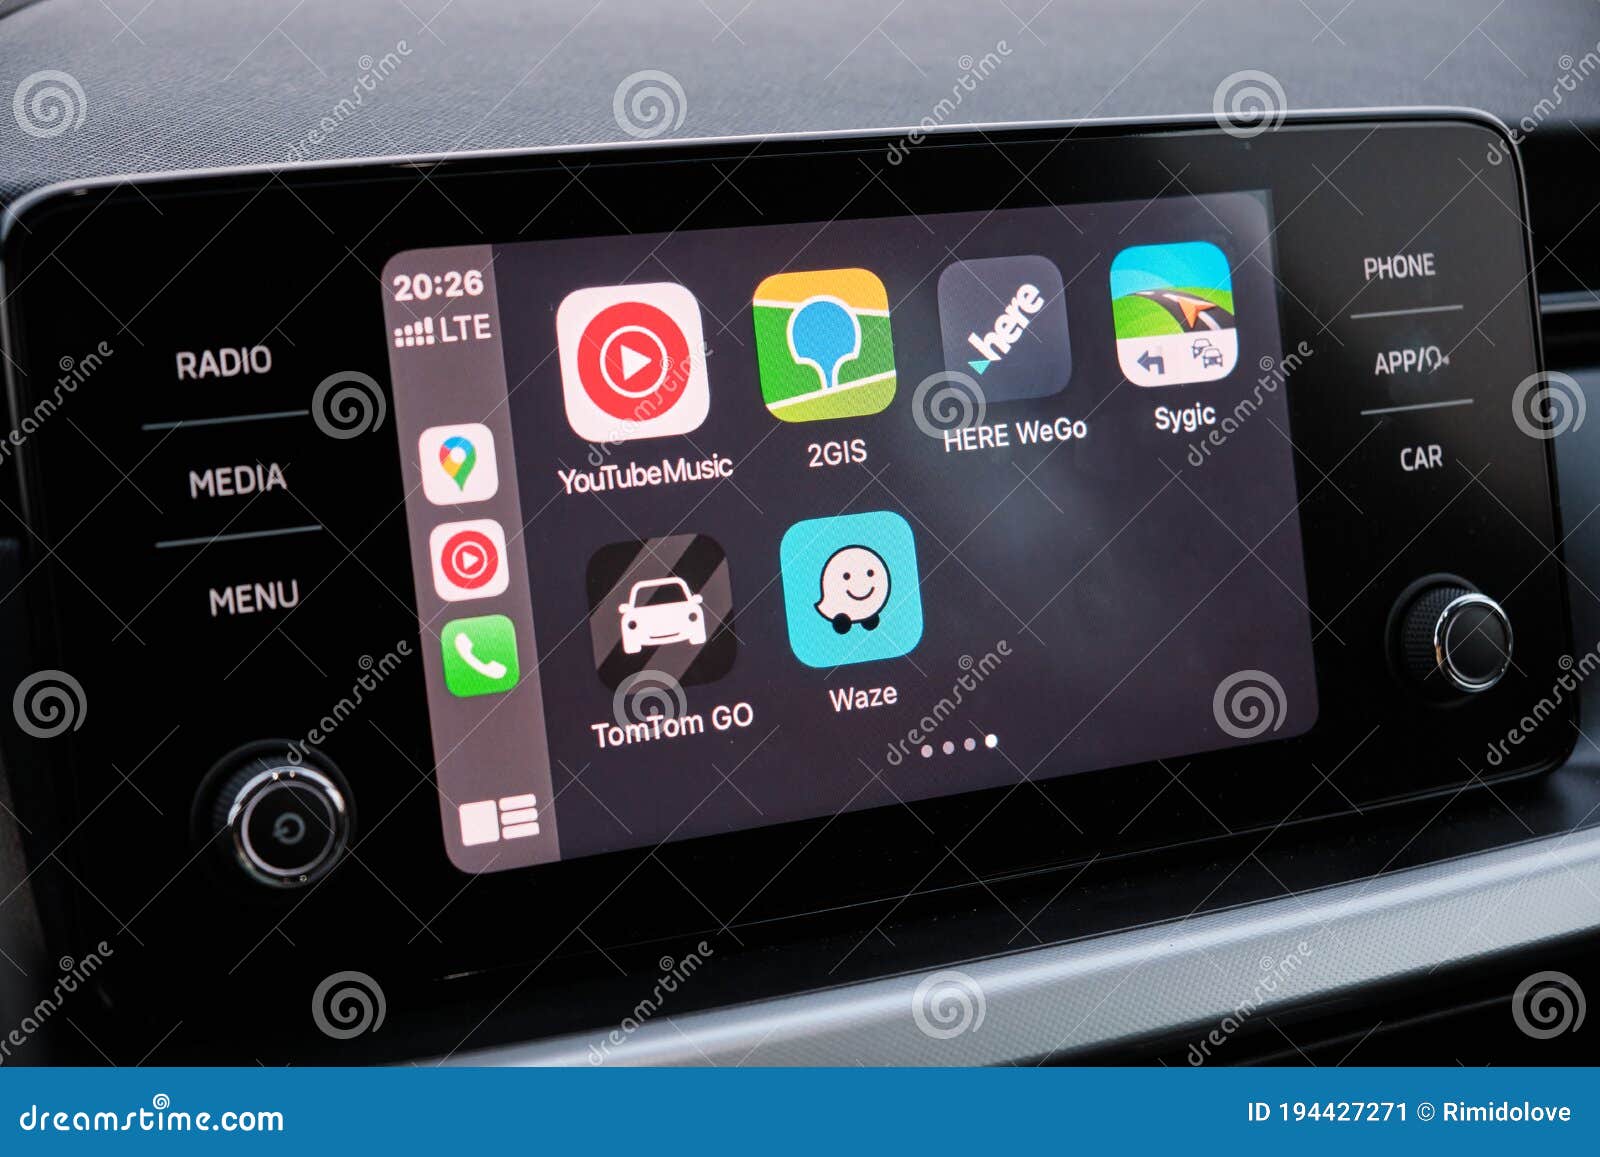 Apple CarPlay Screen in the Car Dashboard. Youtube Music, Waze, Here WeGo, Sygic, TomTom Go Logo on the Screen in Editorial Photo - of button, modern: 194427271